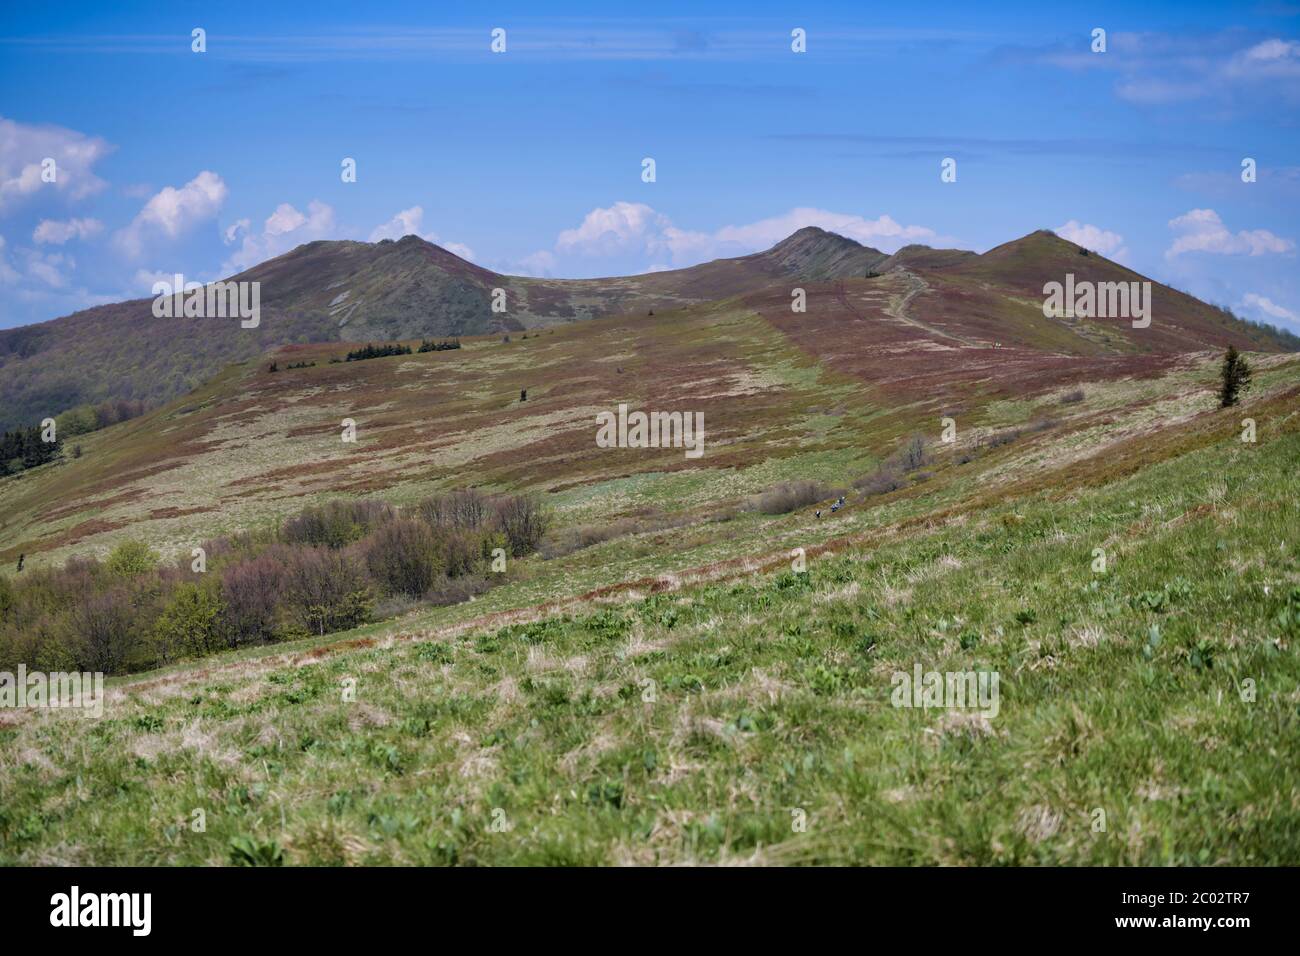 Outstanding 8k panoramic view of Carpathian mountains in spring. Polonina Wetlinska, Bieszczady, Poland. Stock Photo